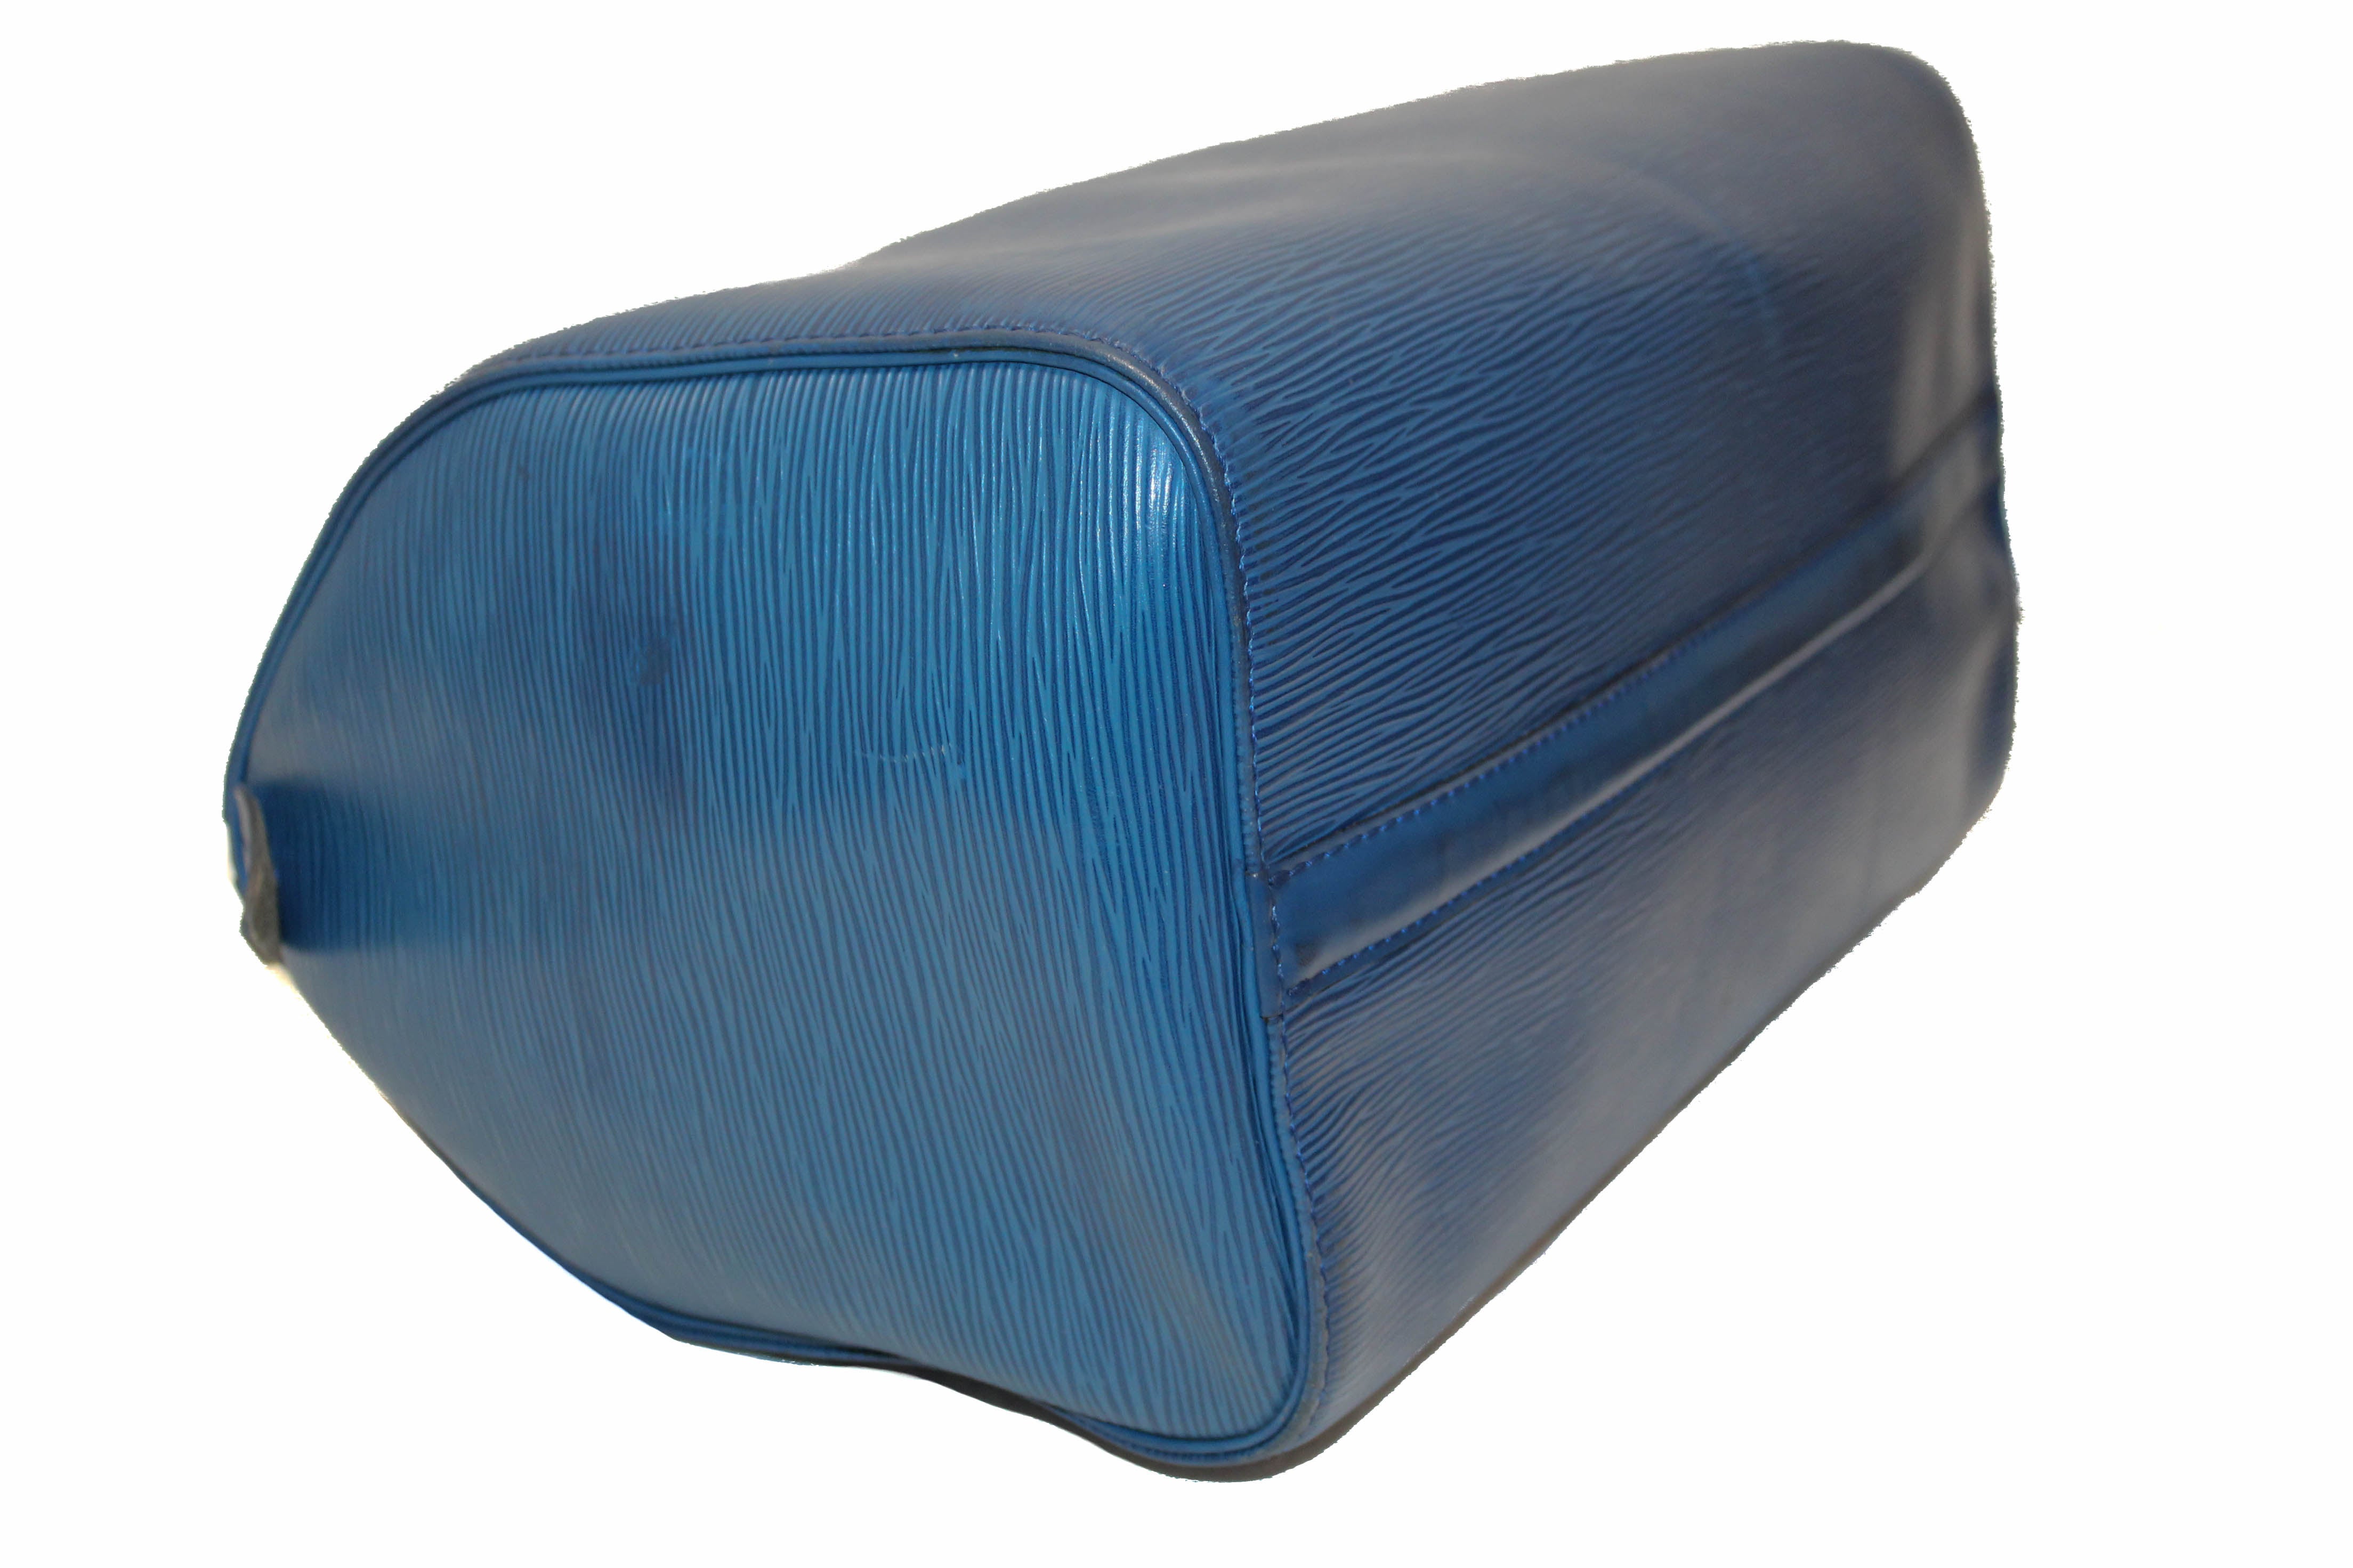 LOUIS VUITTON Handbag M43005 Speedy 30 Epi Leather blue Women Used –